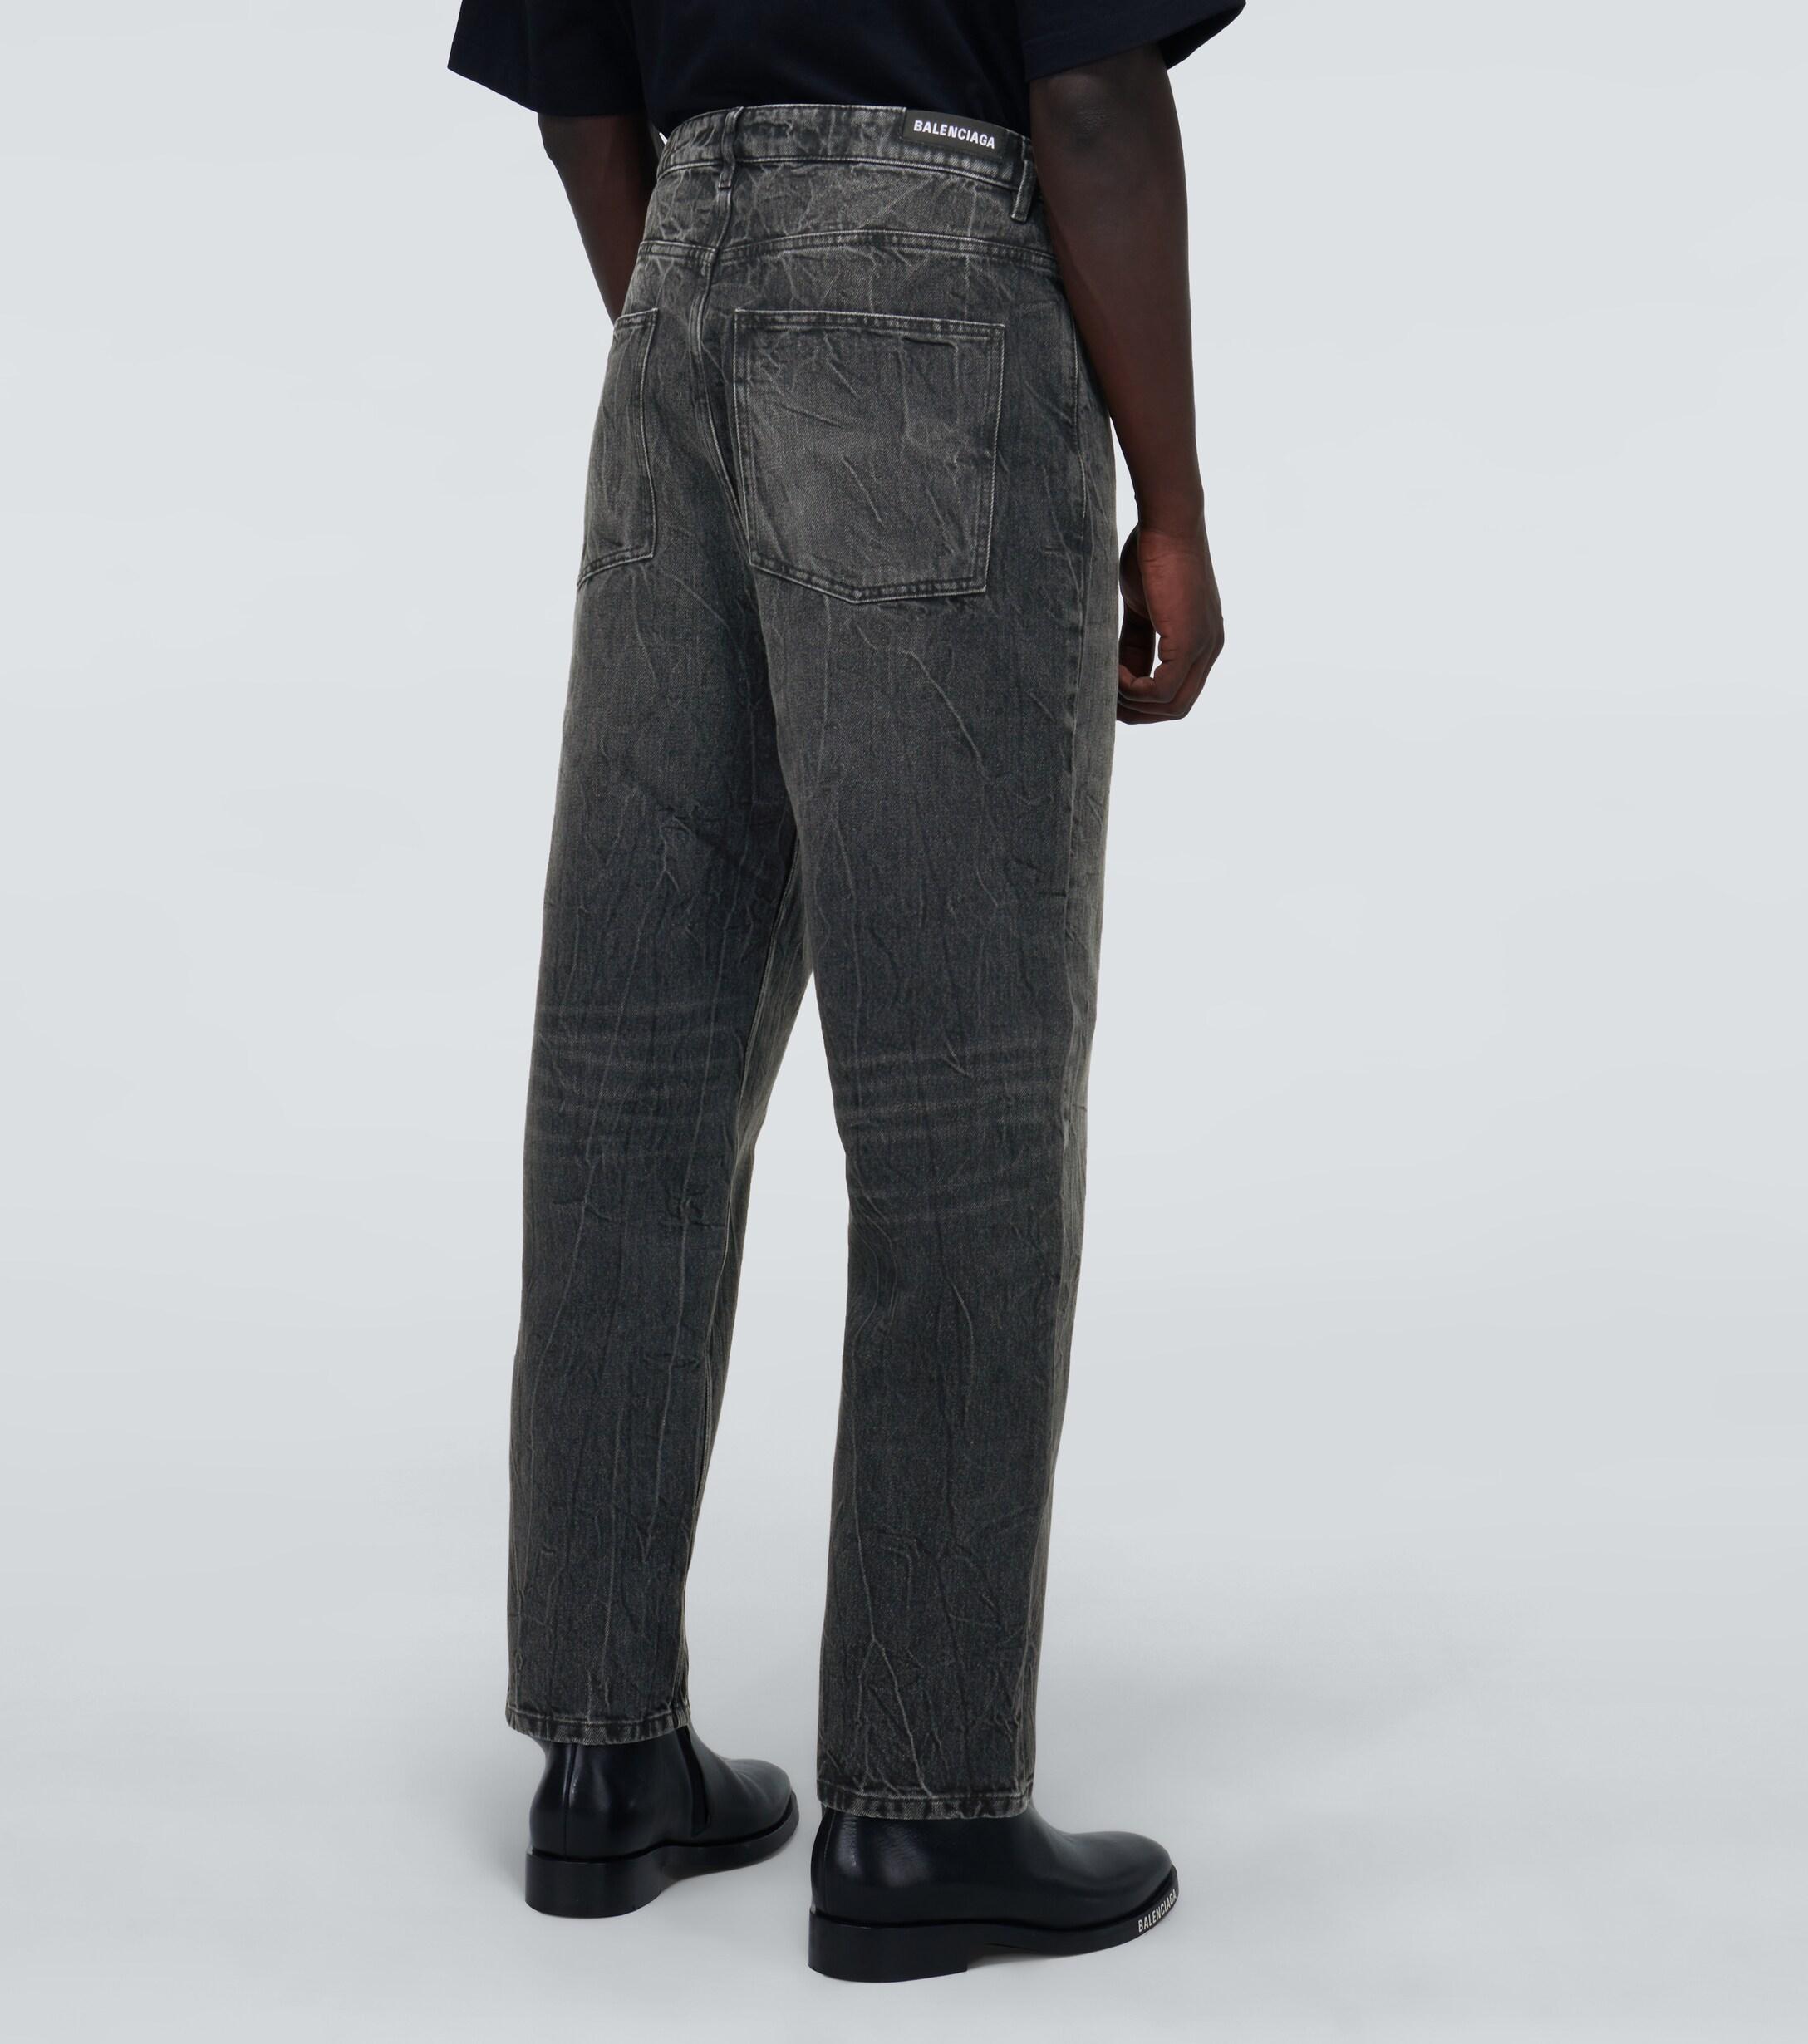 Balenciaga Denim Regular-fit Jeans in Black for Men - Lyst